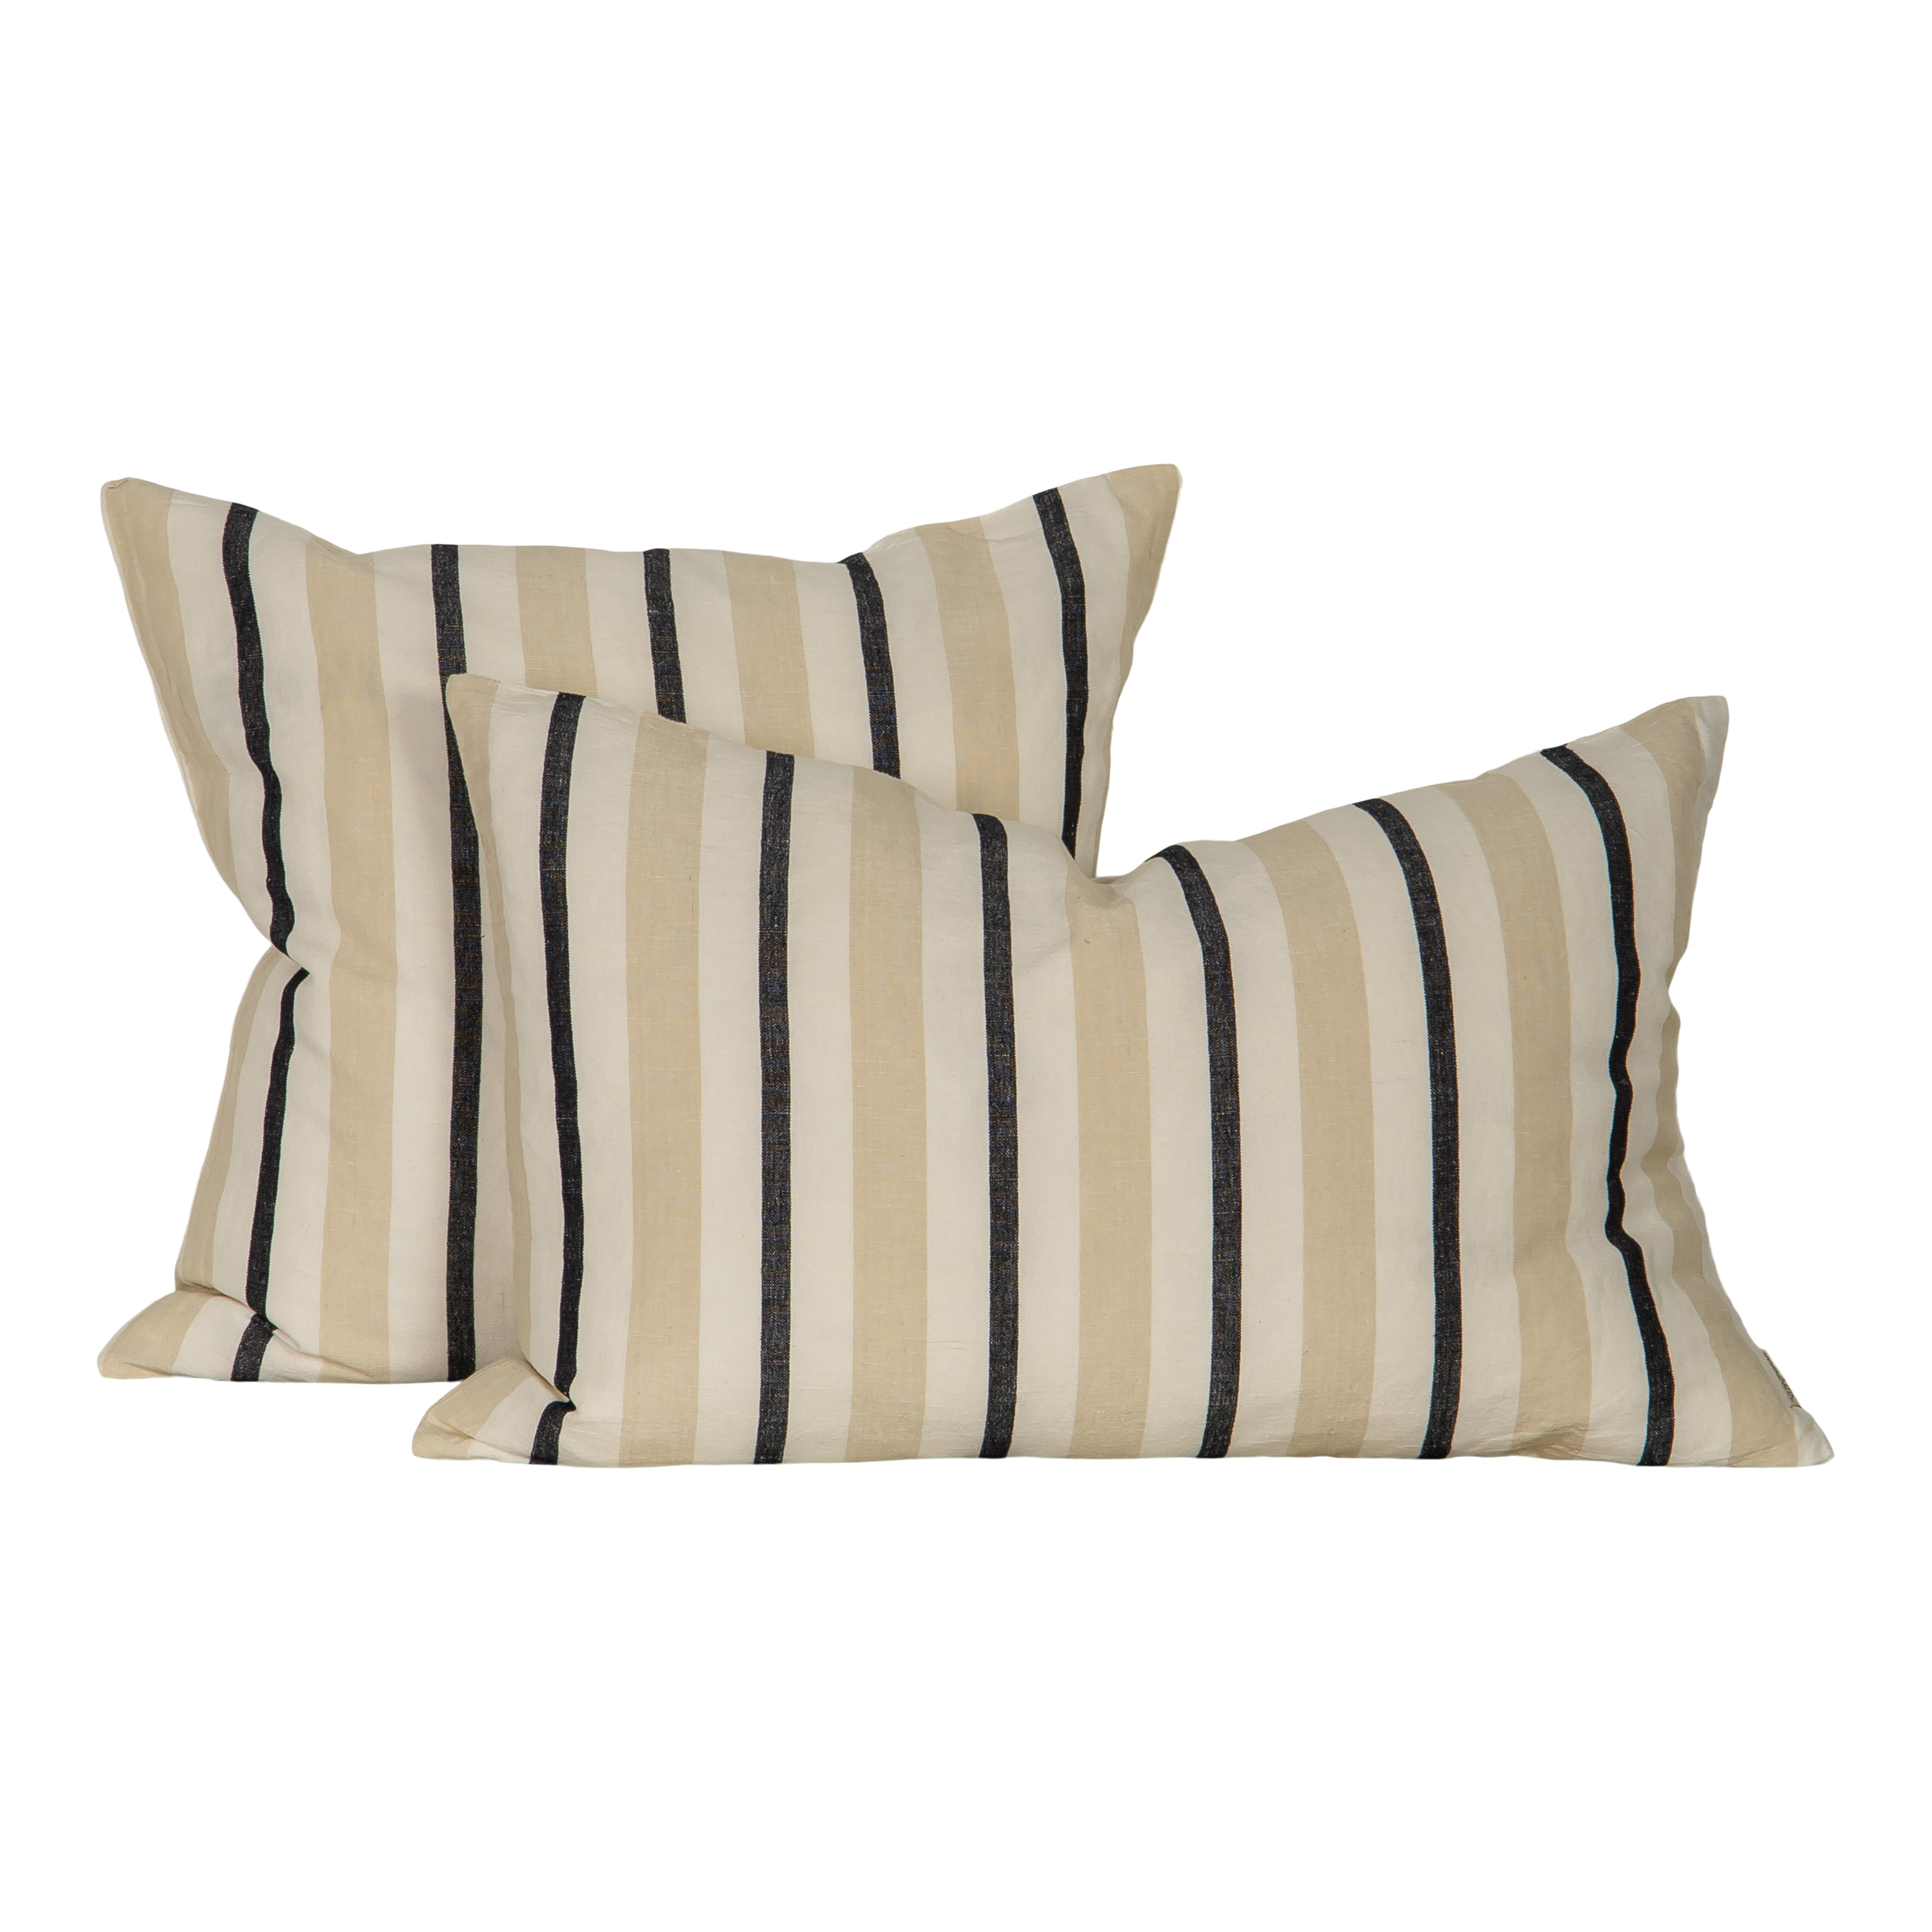 Arlena Pillows (set of 3)